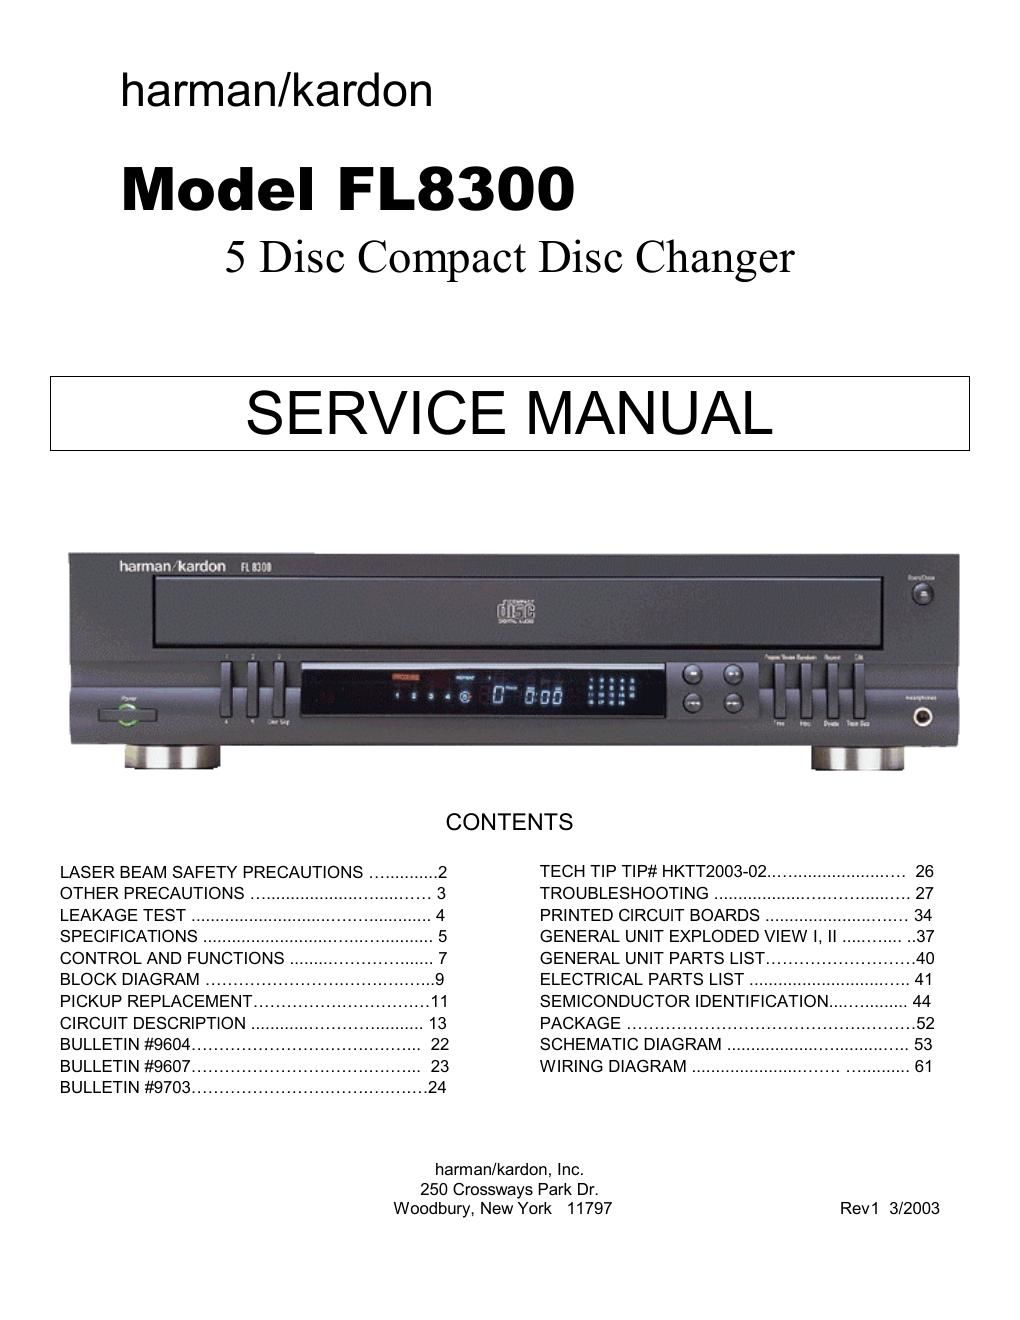 harman kardon fl 8300 service manual